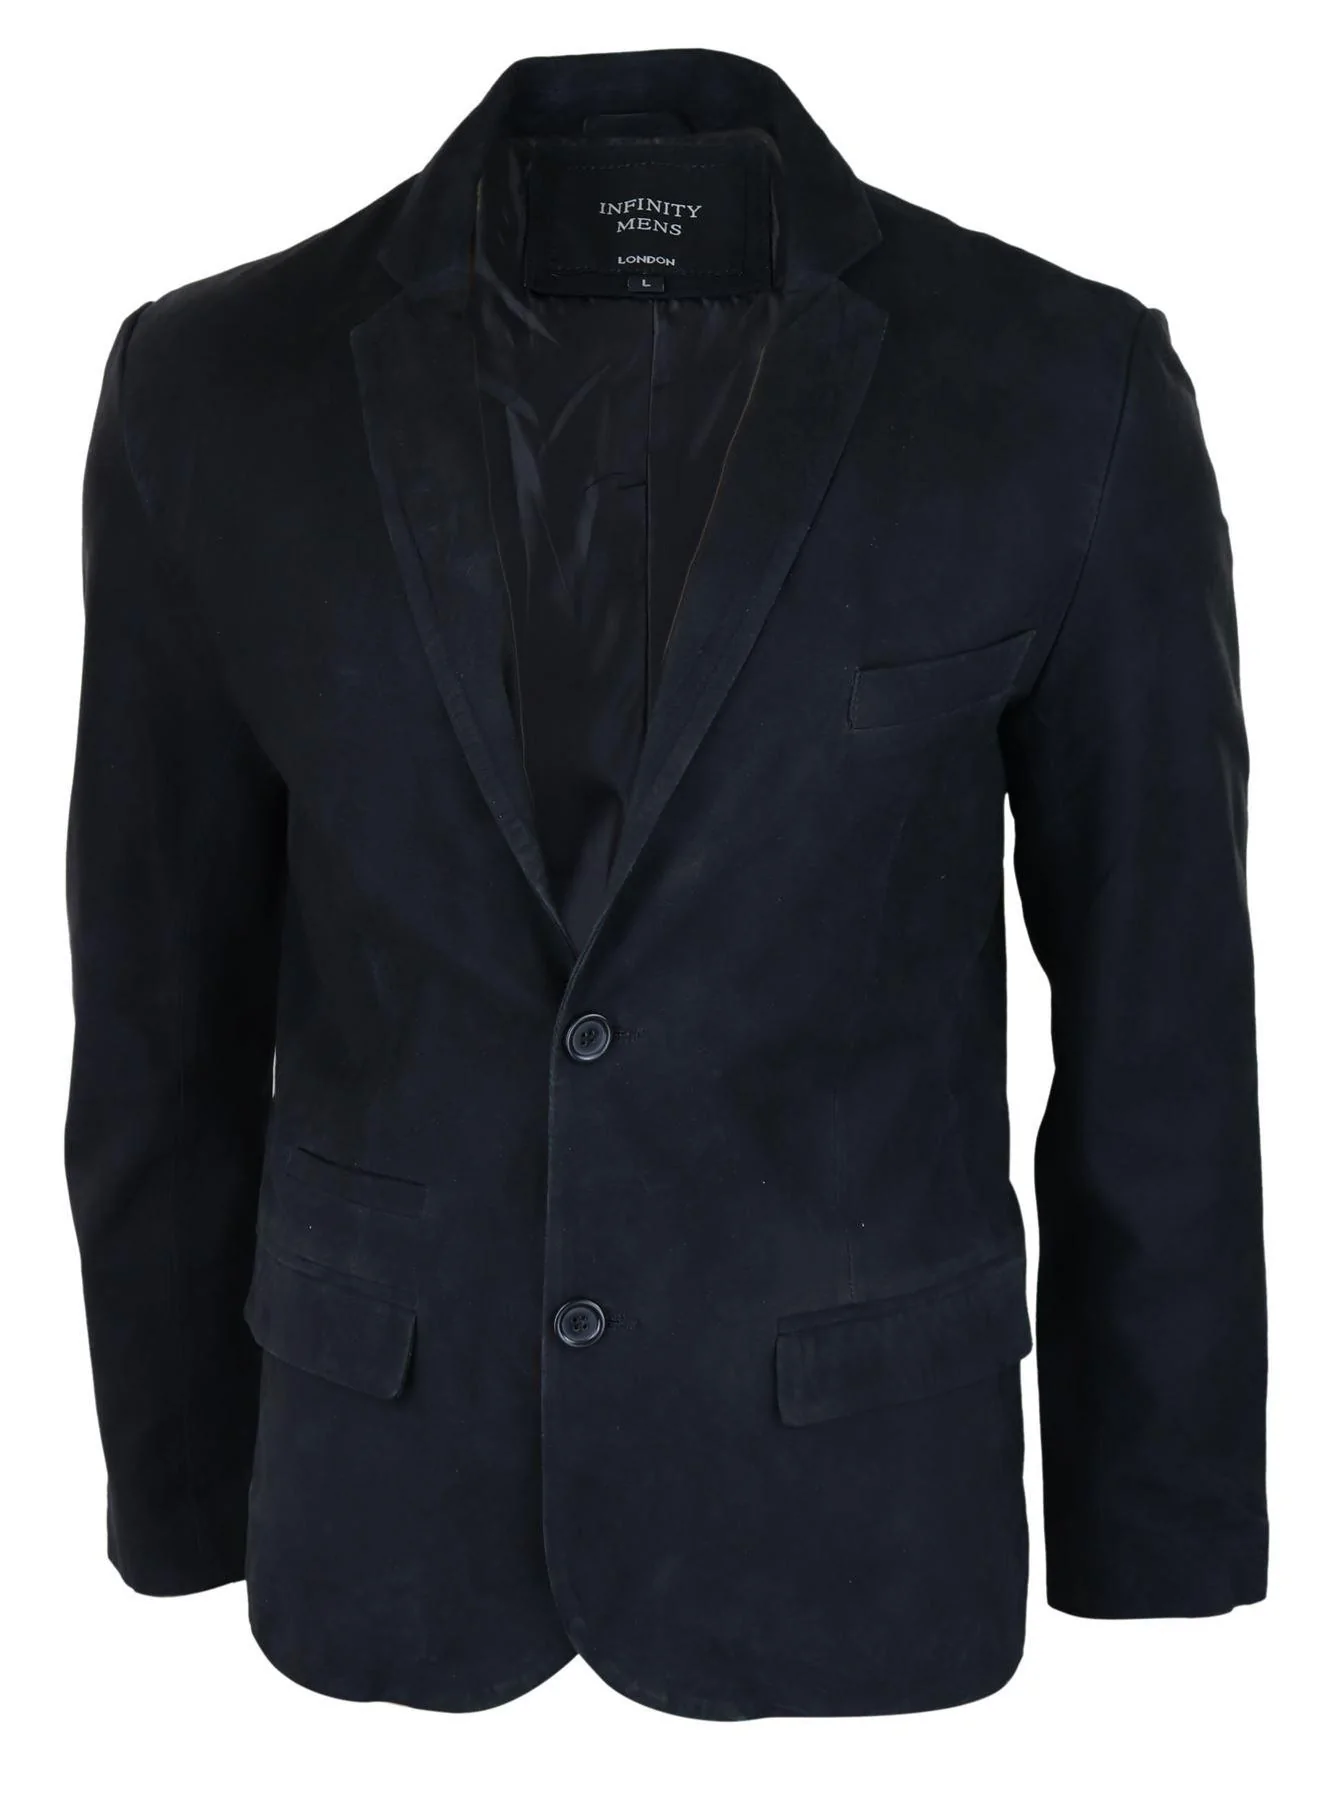 Mens Genuine Suede Blazer Style Jacket Leather Mens Classic VIntage Smart Casual Black